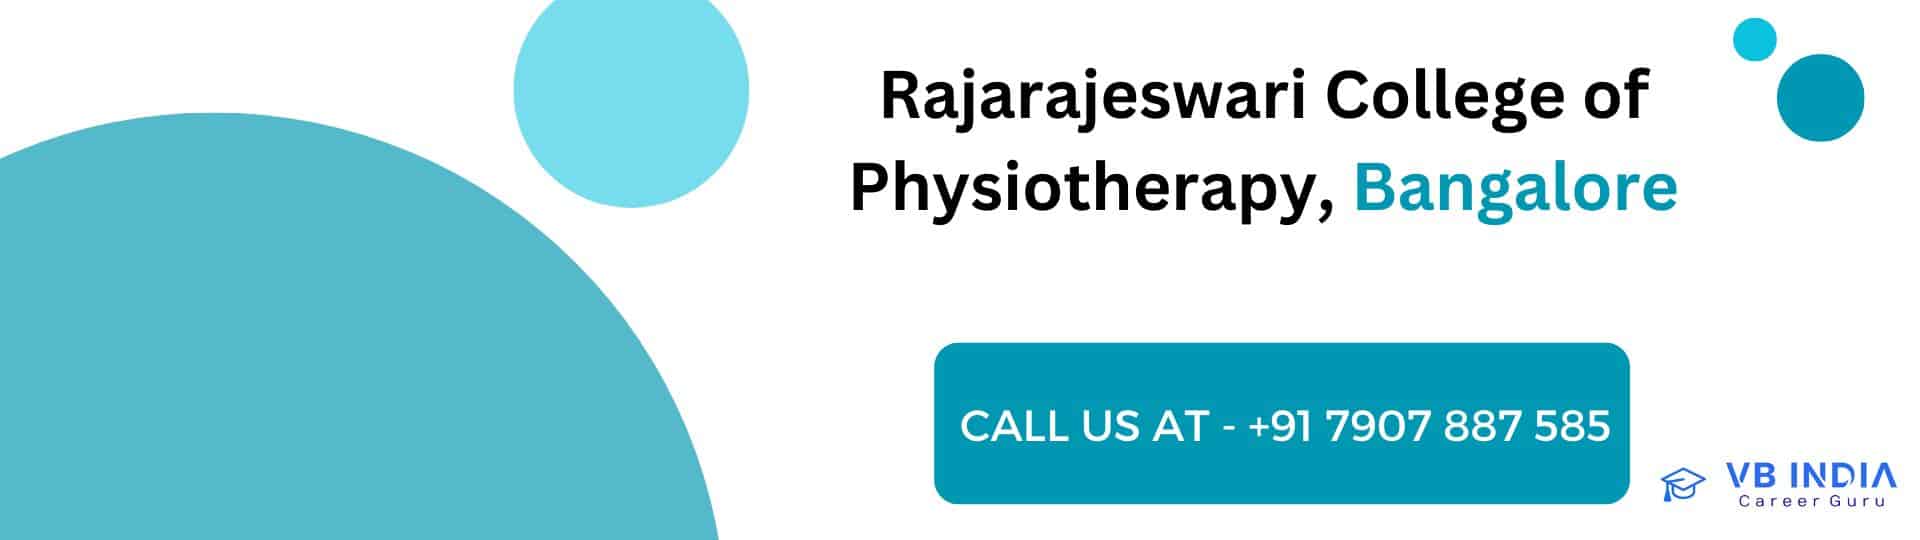 Rajarajeswari College of Physiotherapy Bangalore